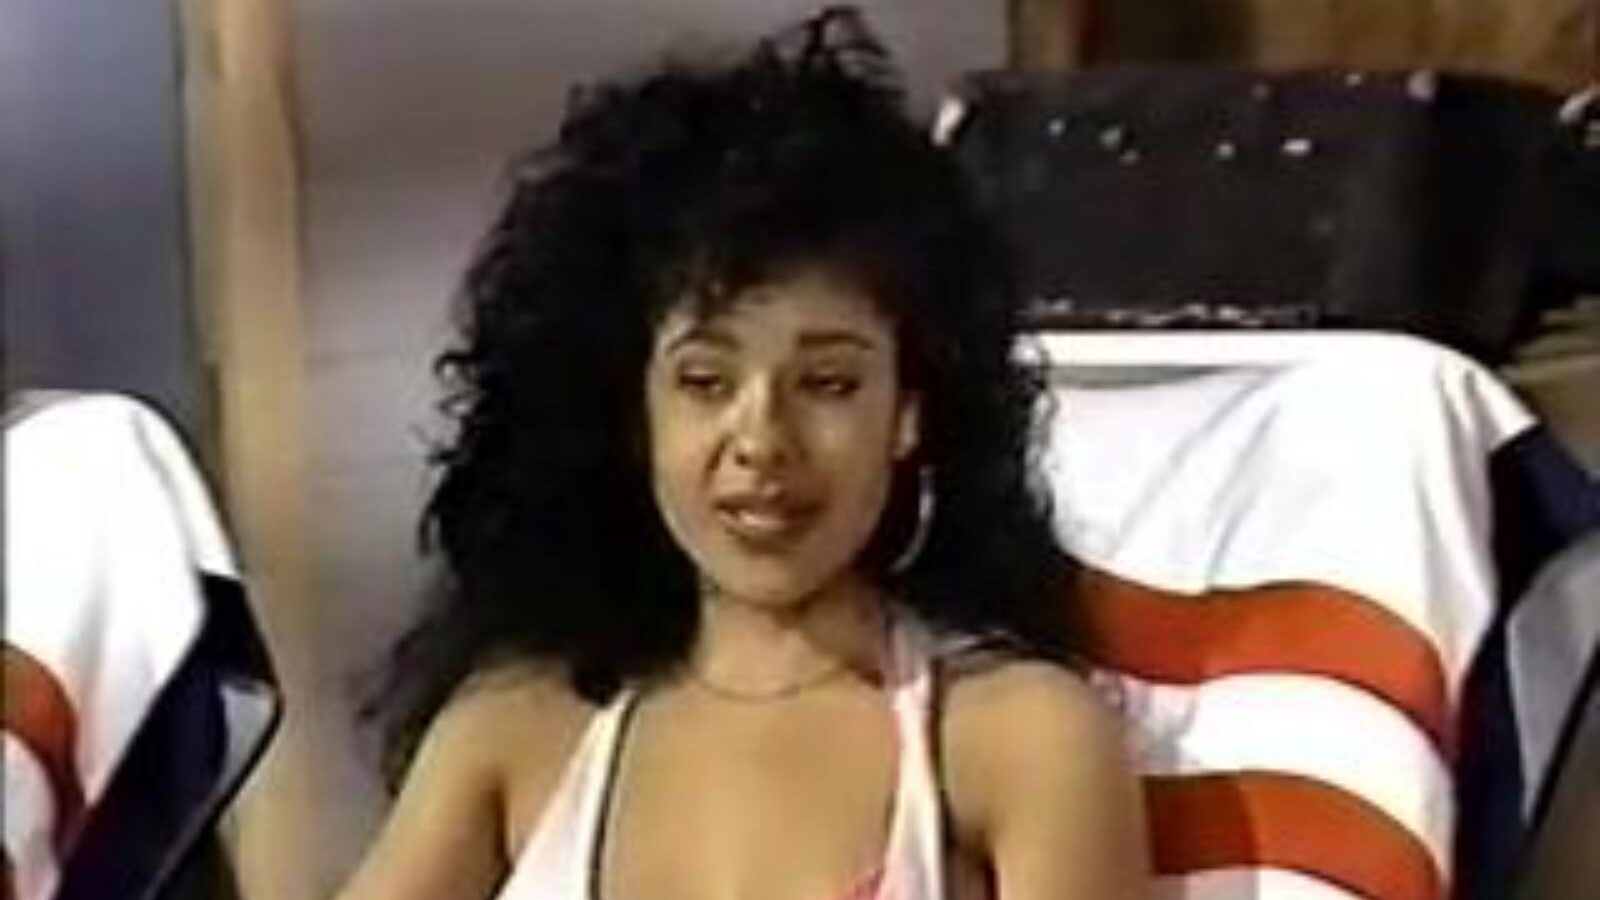 retro usa 693 90s: video porno 1992 gratuit 0c - xhamster ceas retro usa 693 anii 90 film cu filmul cu cocoașă gratuit pe xhamster, cu cea mai sexy sex din 1992, retro din anii 90, scene gratuite cu filme pornografice gratuite din SUA și SUA